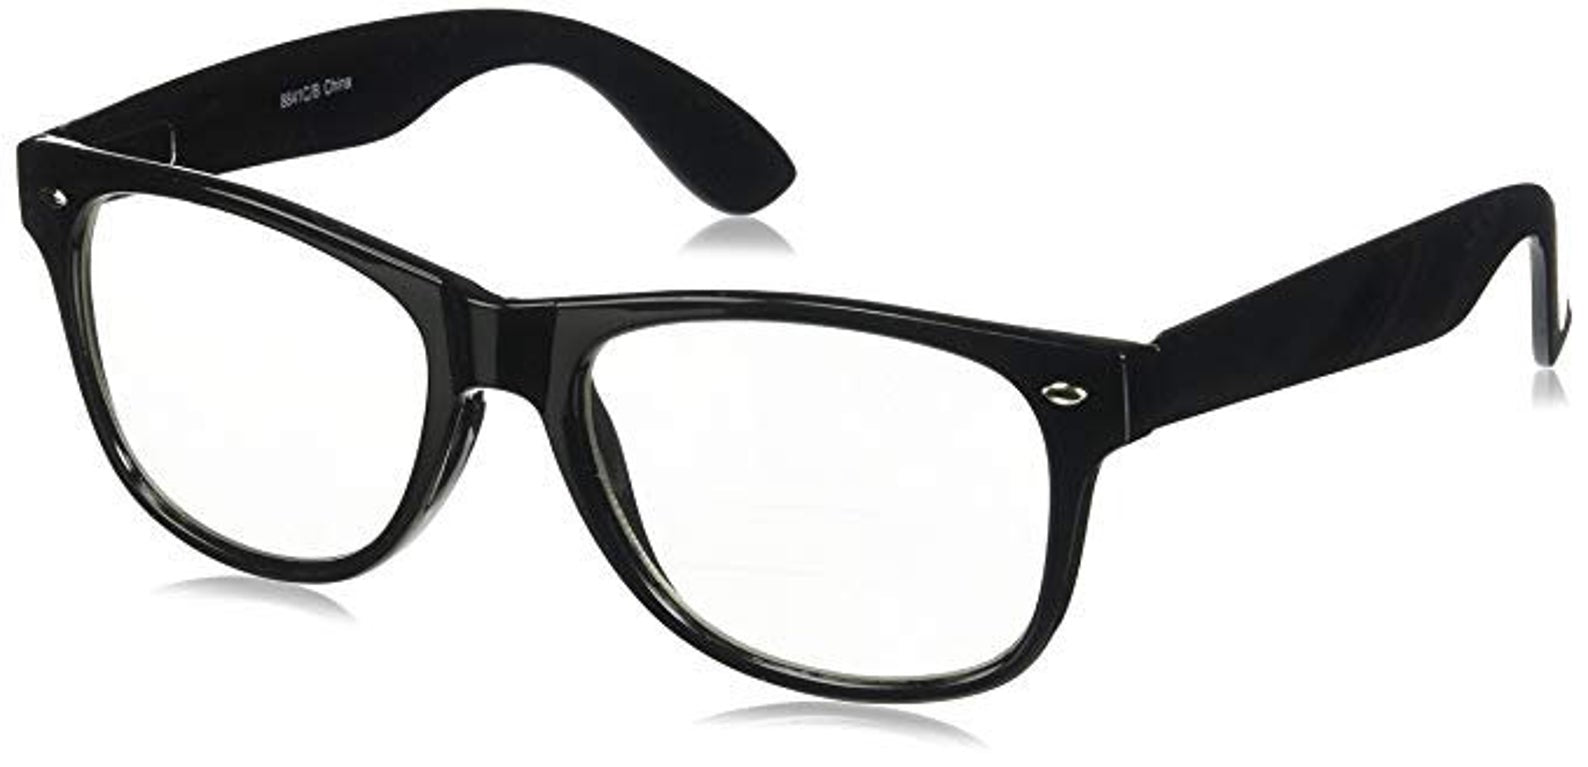 Glasses frame. Черные очки. Очки картинка. Очки pdf. Fly Eye очки.